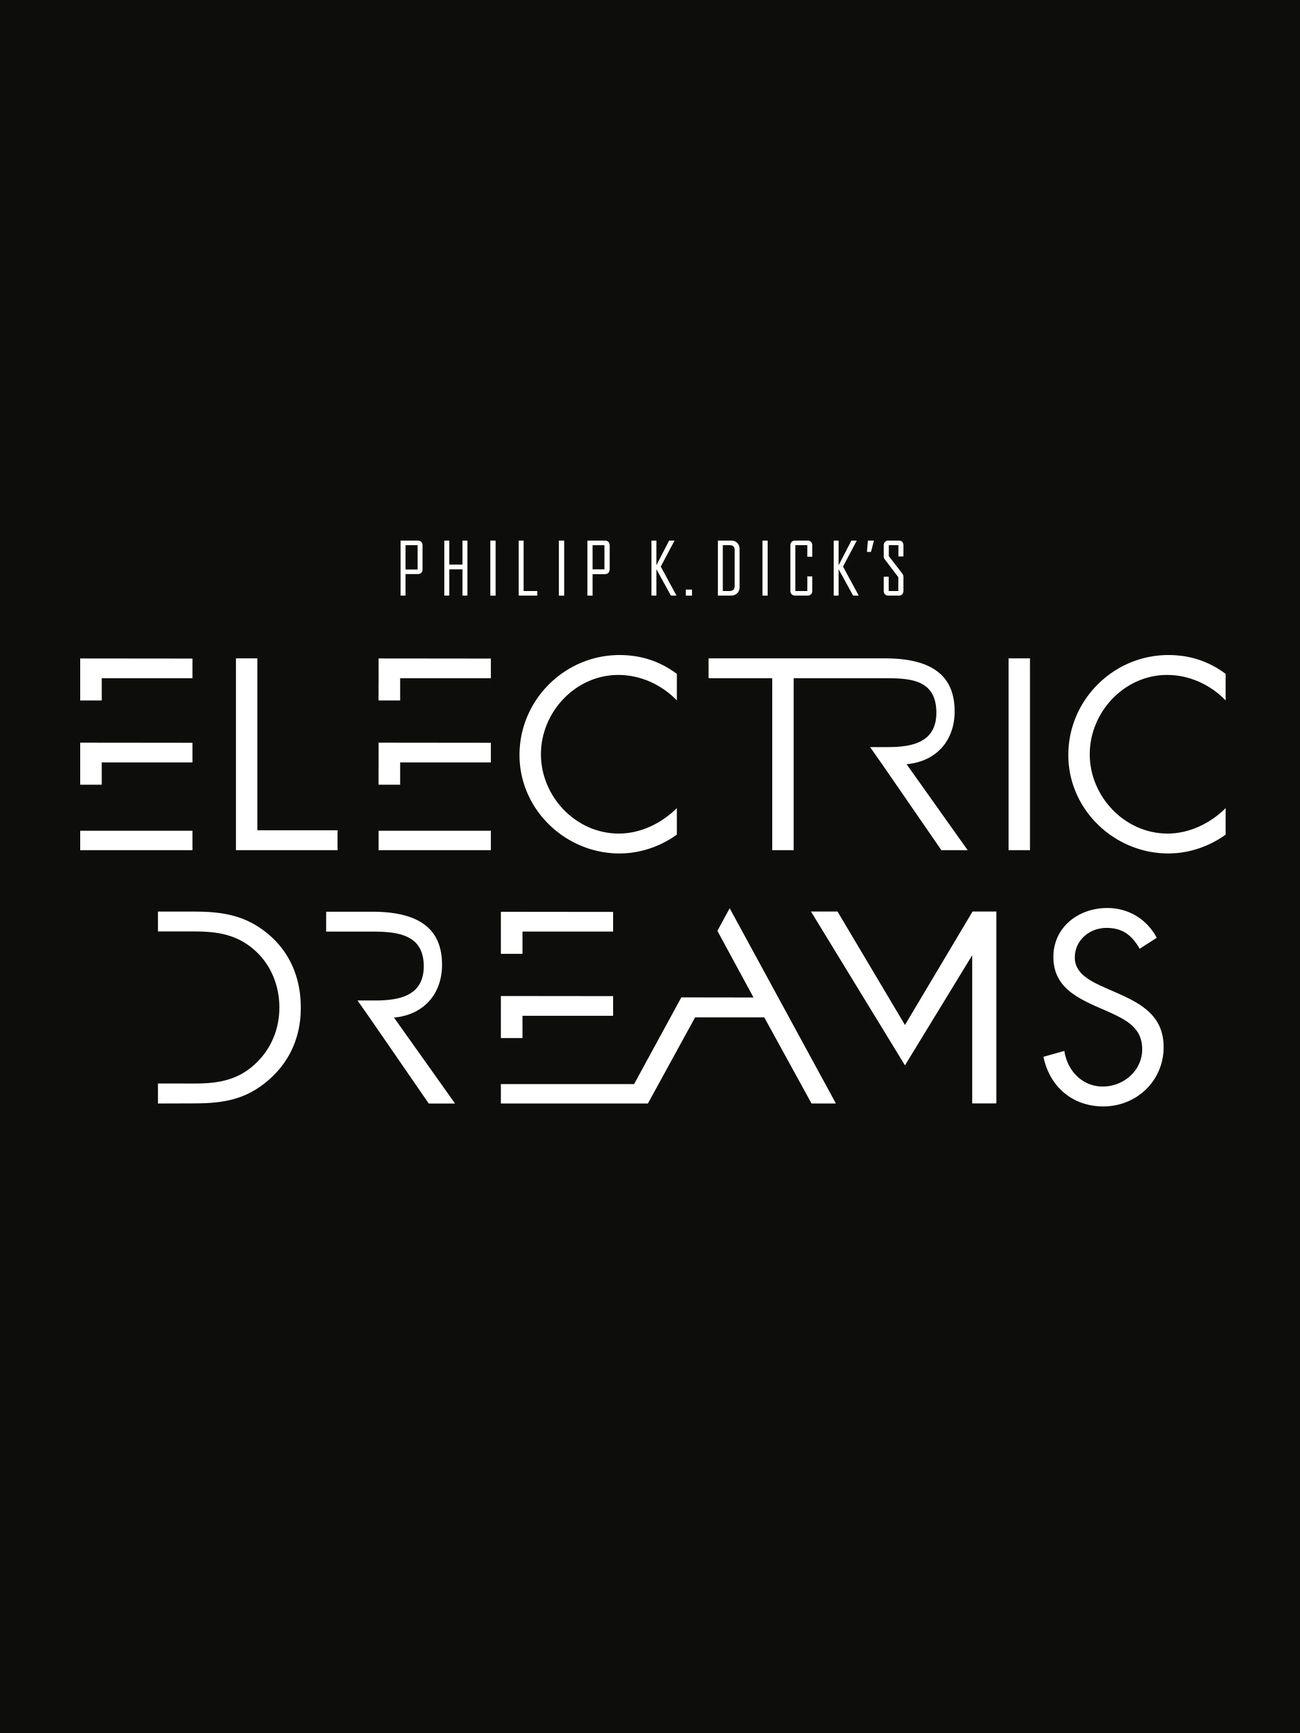 Philip K. Dick's Electric Dreams TV Show: News, Videos, Full